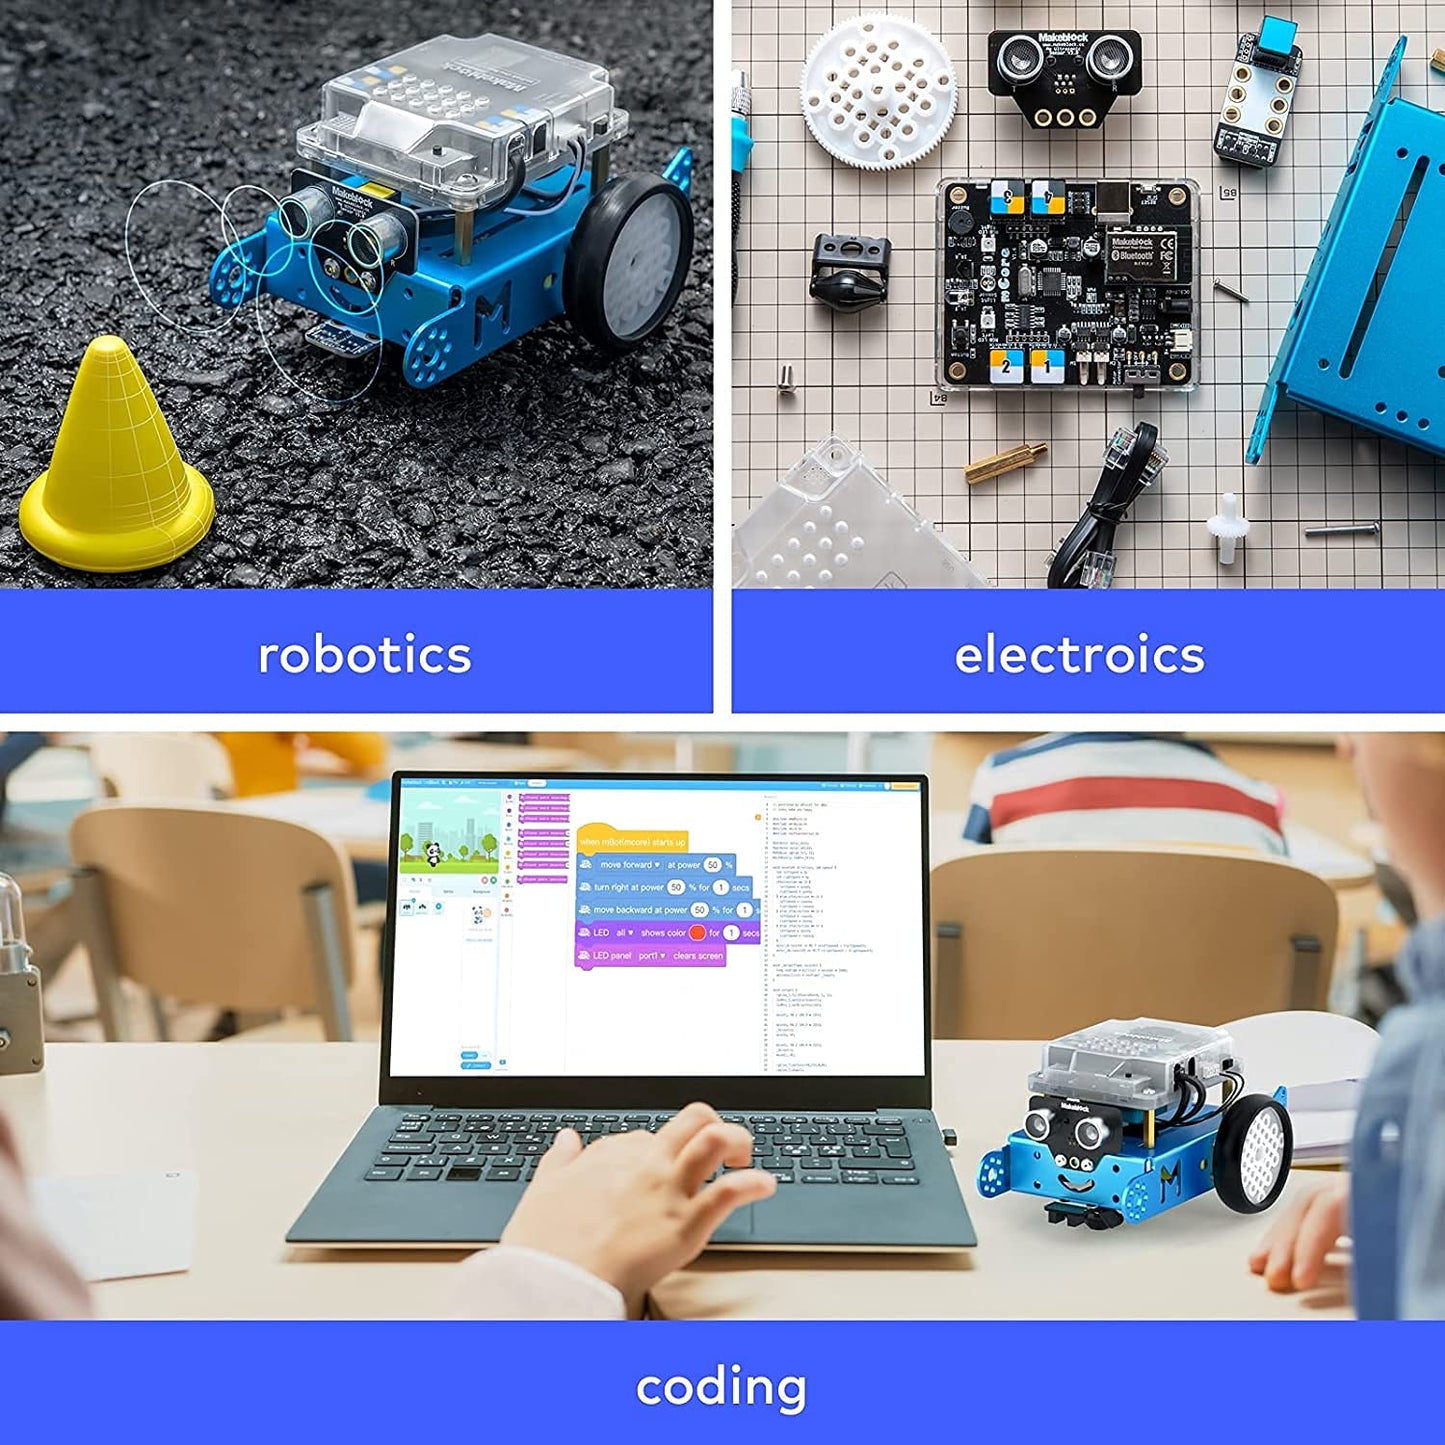 Makeblock mBot Robot Kit STEM Toy for Kids to Learn Programming